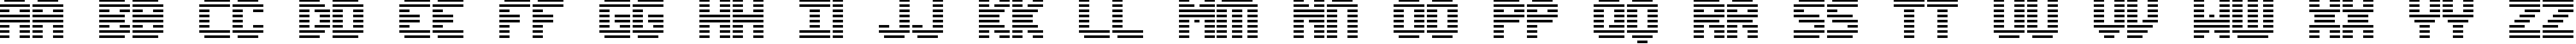 Пример написания английского алфавита шрифтом Edit Undo Line BRK